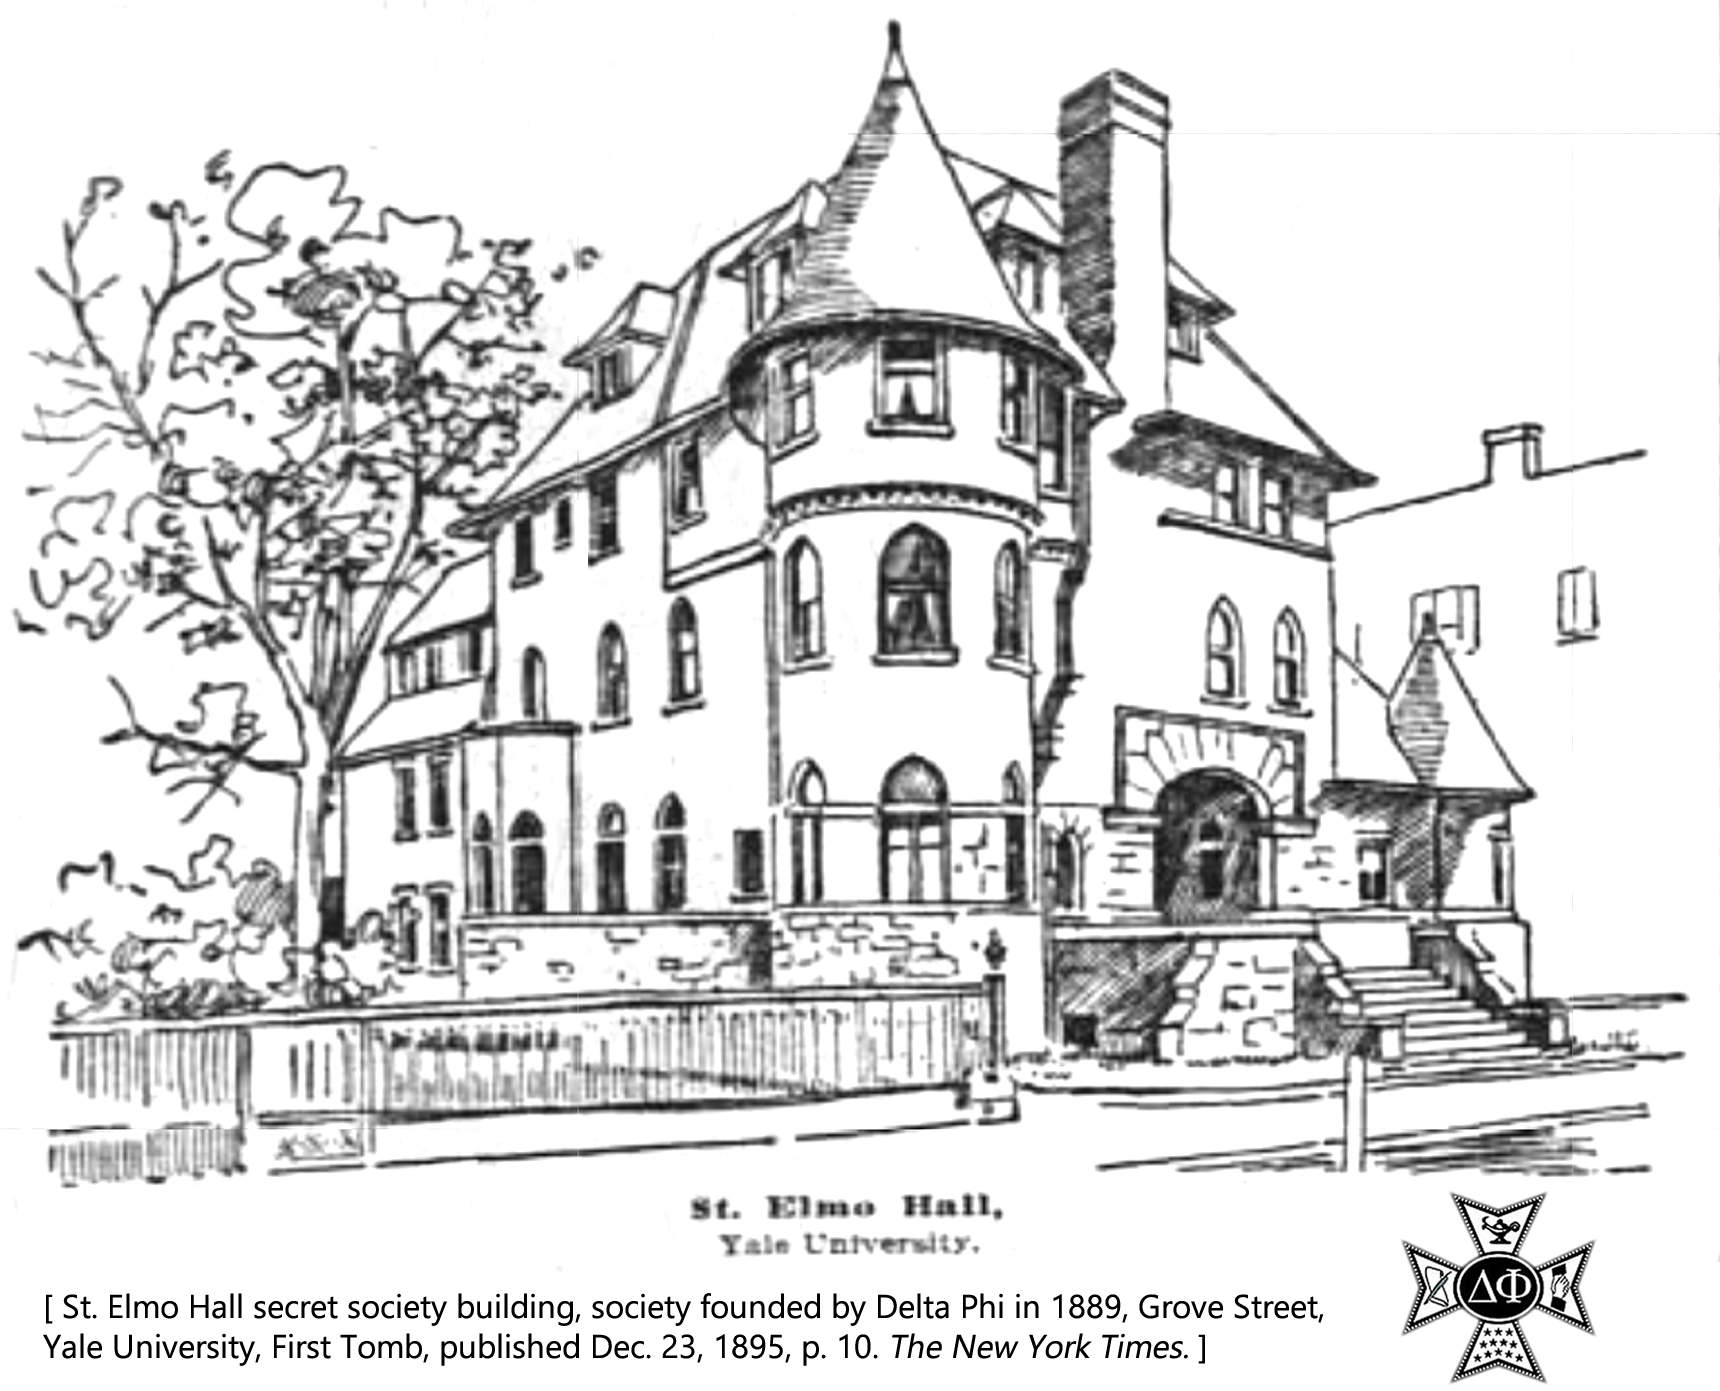 Editor. (Dec. 23, 1895). Property of Old Yale, eg., St. Elmo Hall (aka Delta Phi), Grove Street. p. 10. The New York Times. 